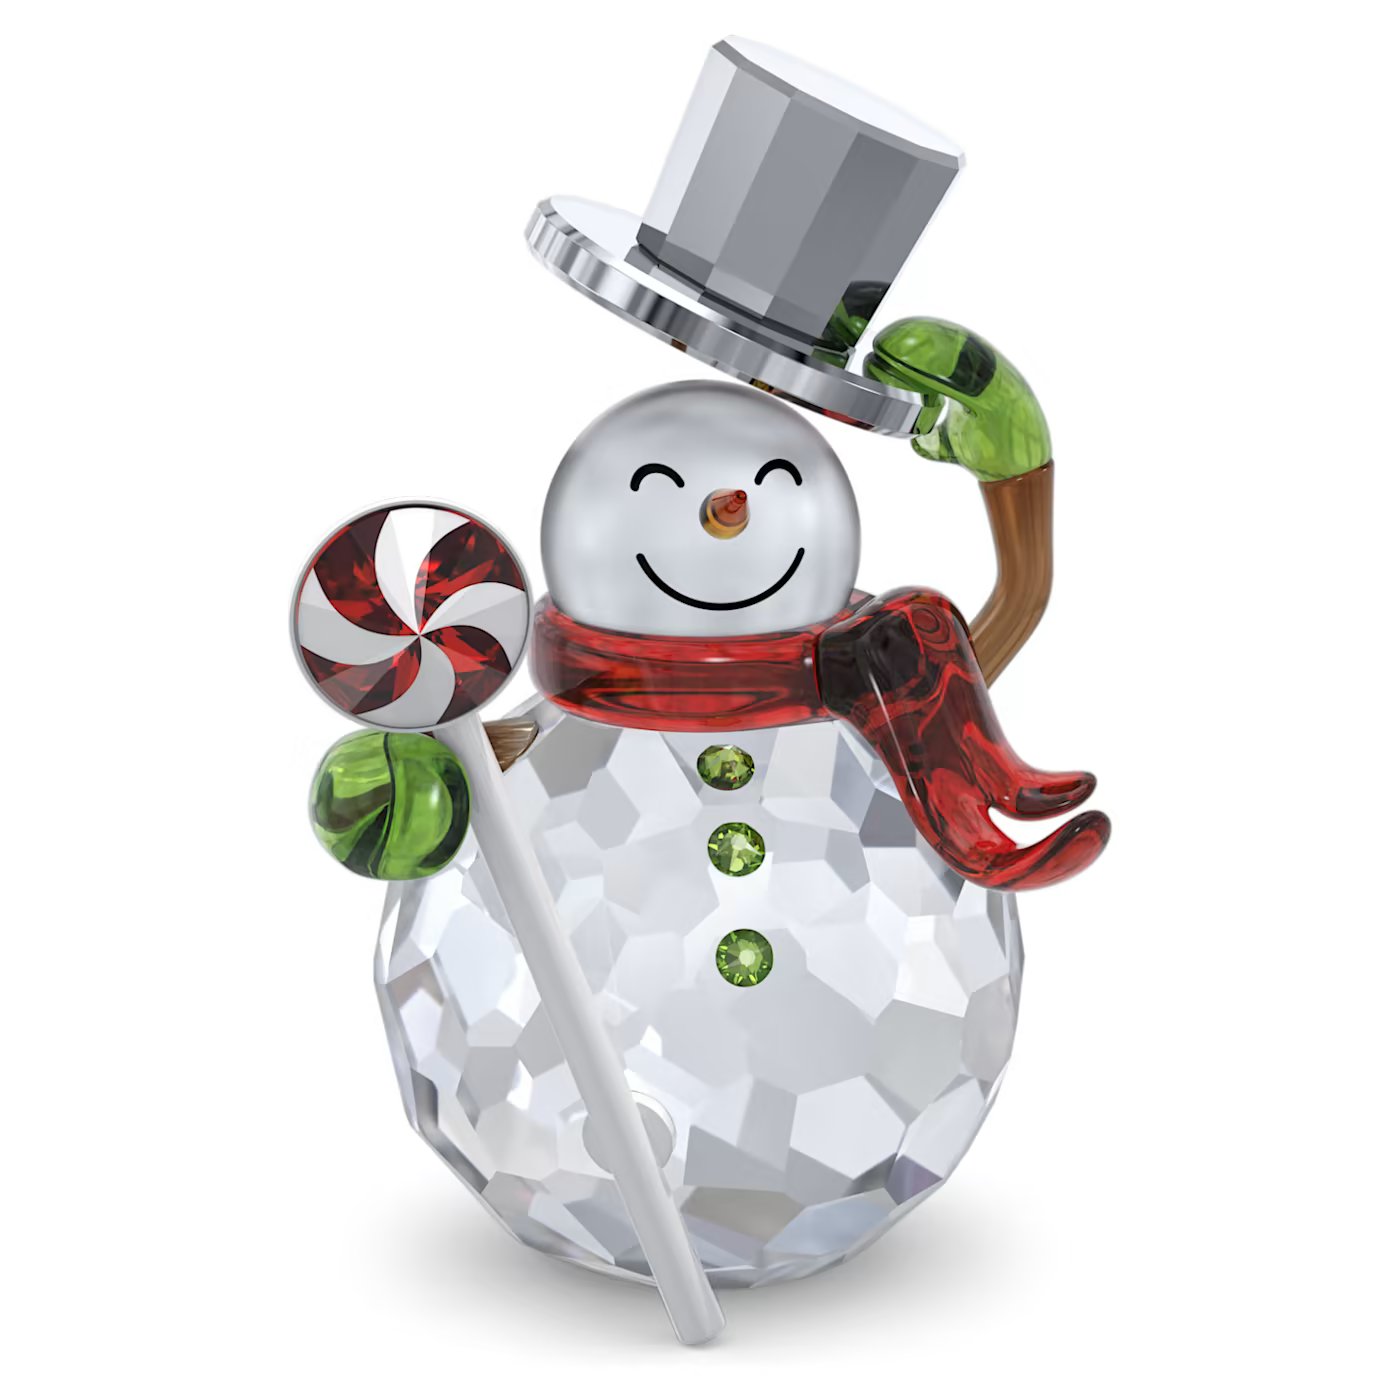 64aee236400db_holiday-cheers-dulcis-snowman-swarovski-5655434.jpg